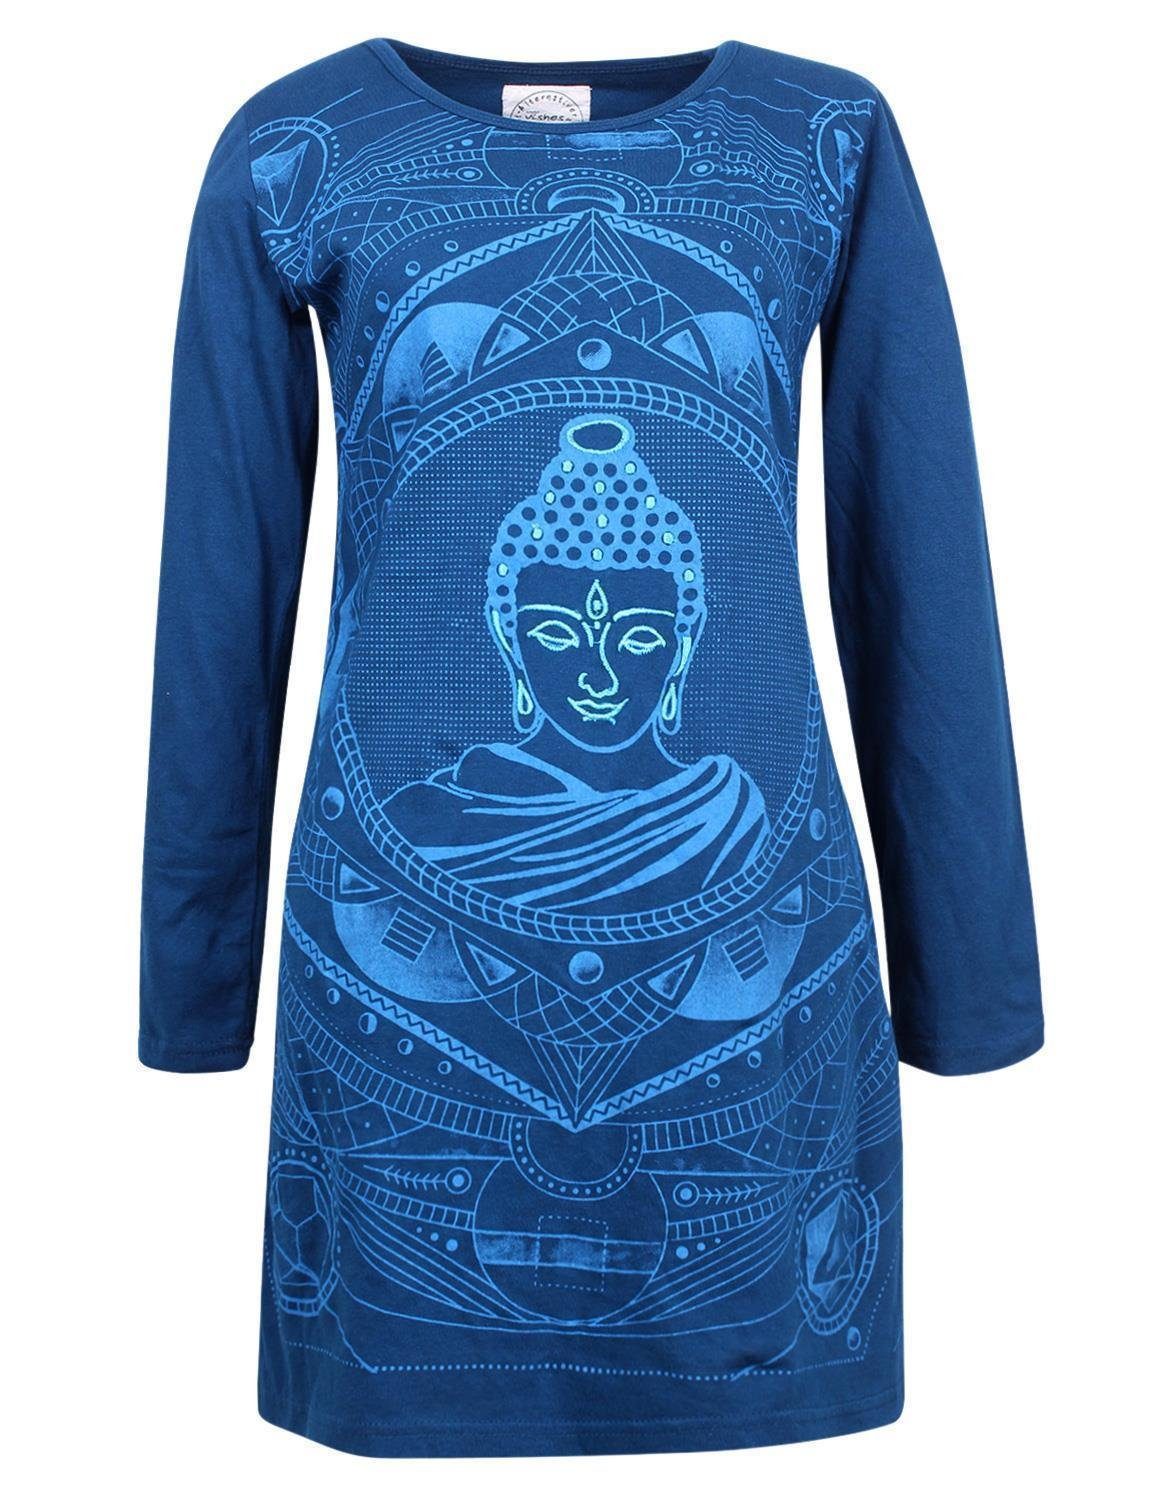 Vishes Midikleid Langarm Baumwollkleid Shirtkleid mit Buddha Druck Übergangskleid, Hippie Style türkis